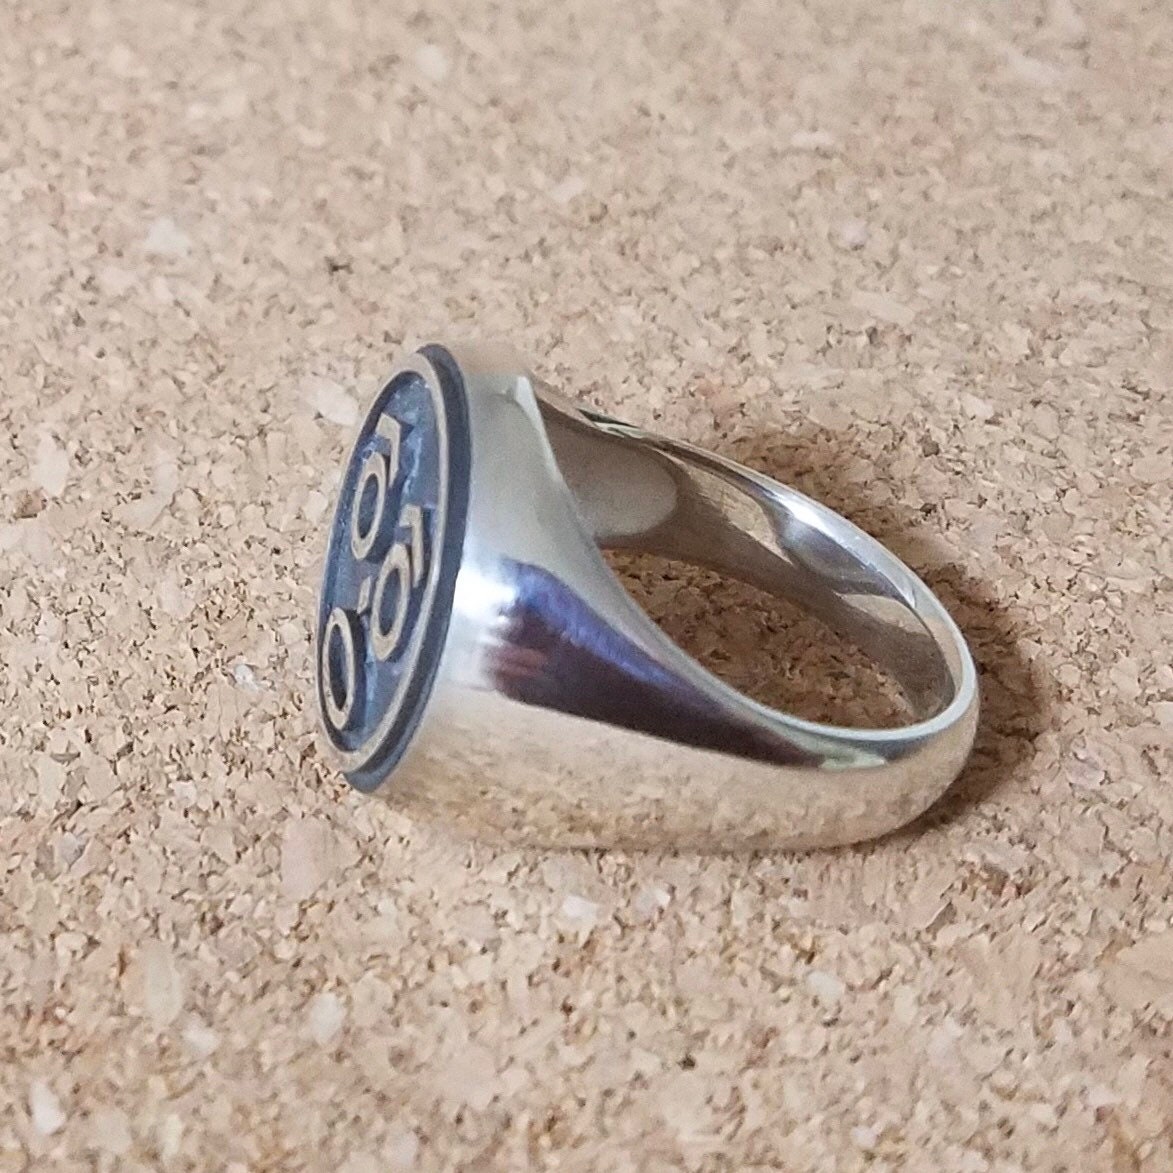 ZULU NATION Silver Ring With a Vintage Pamphlet Celebrating 